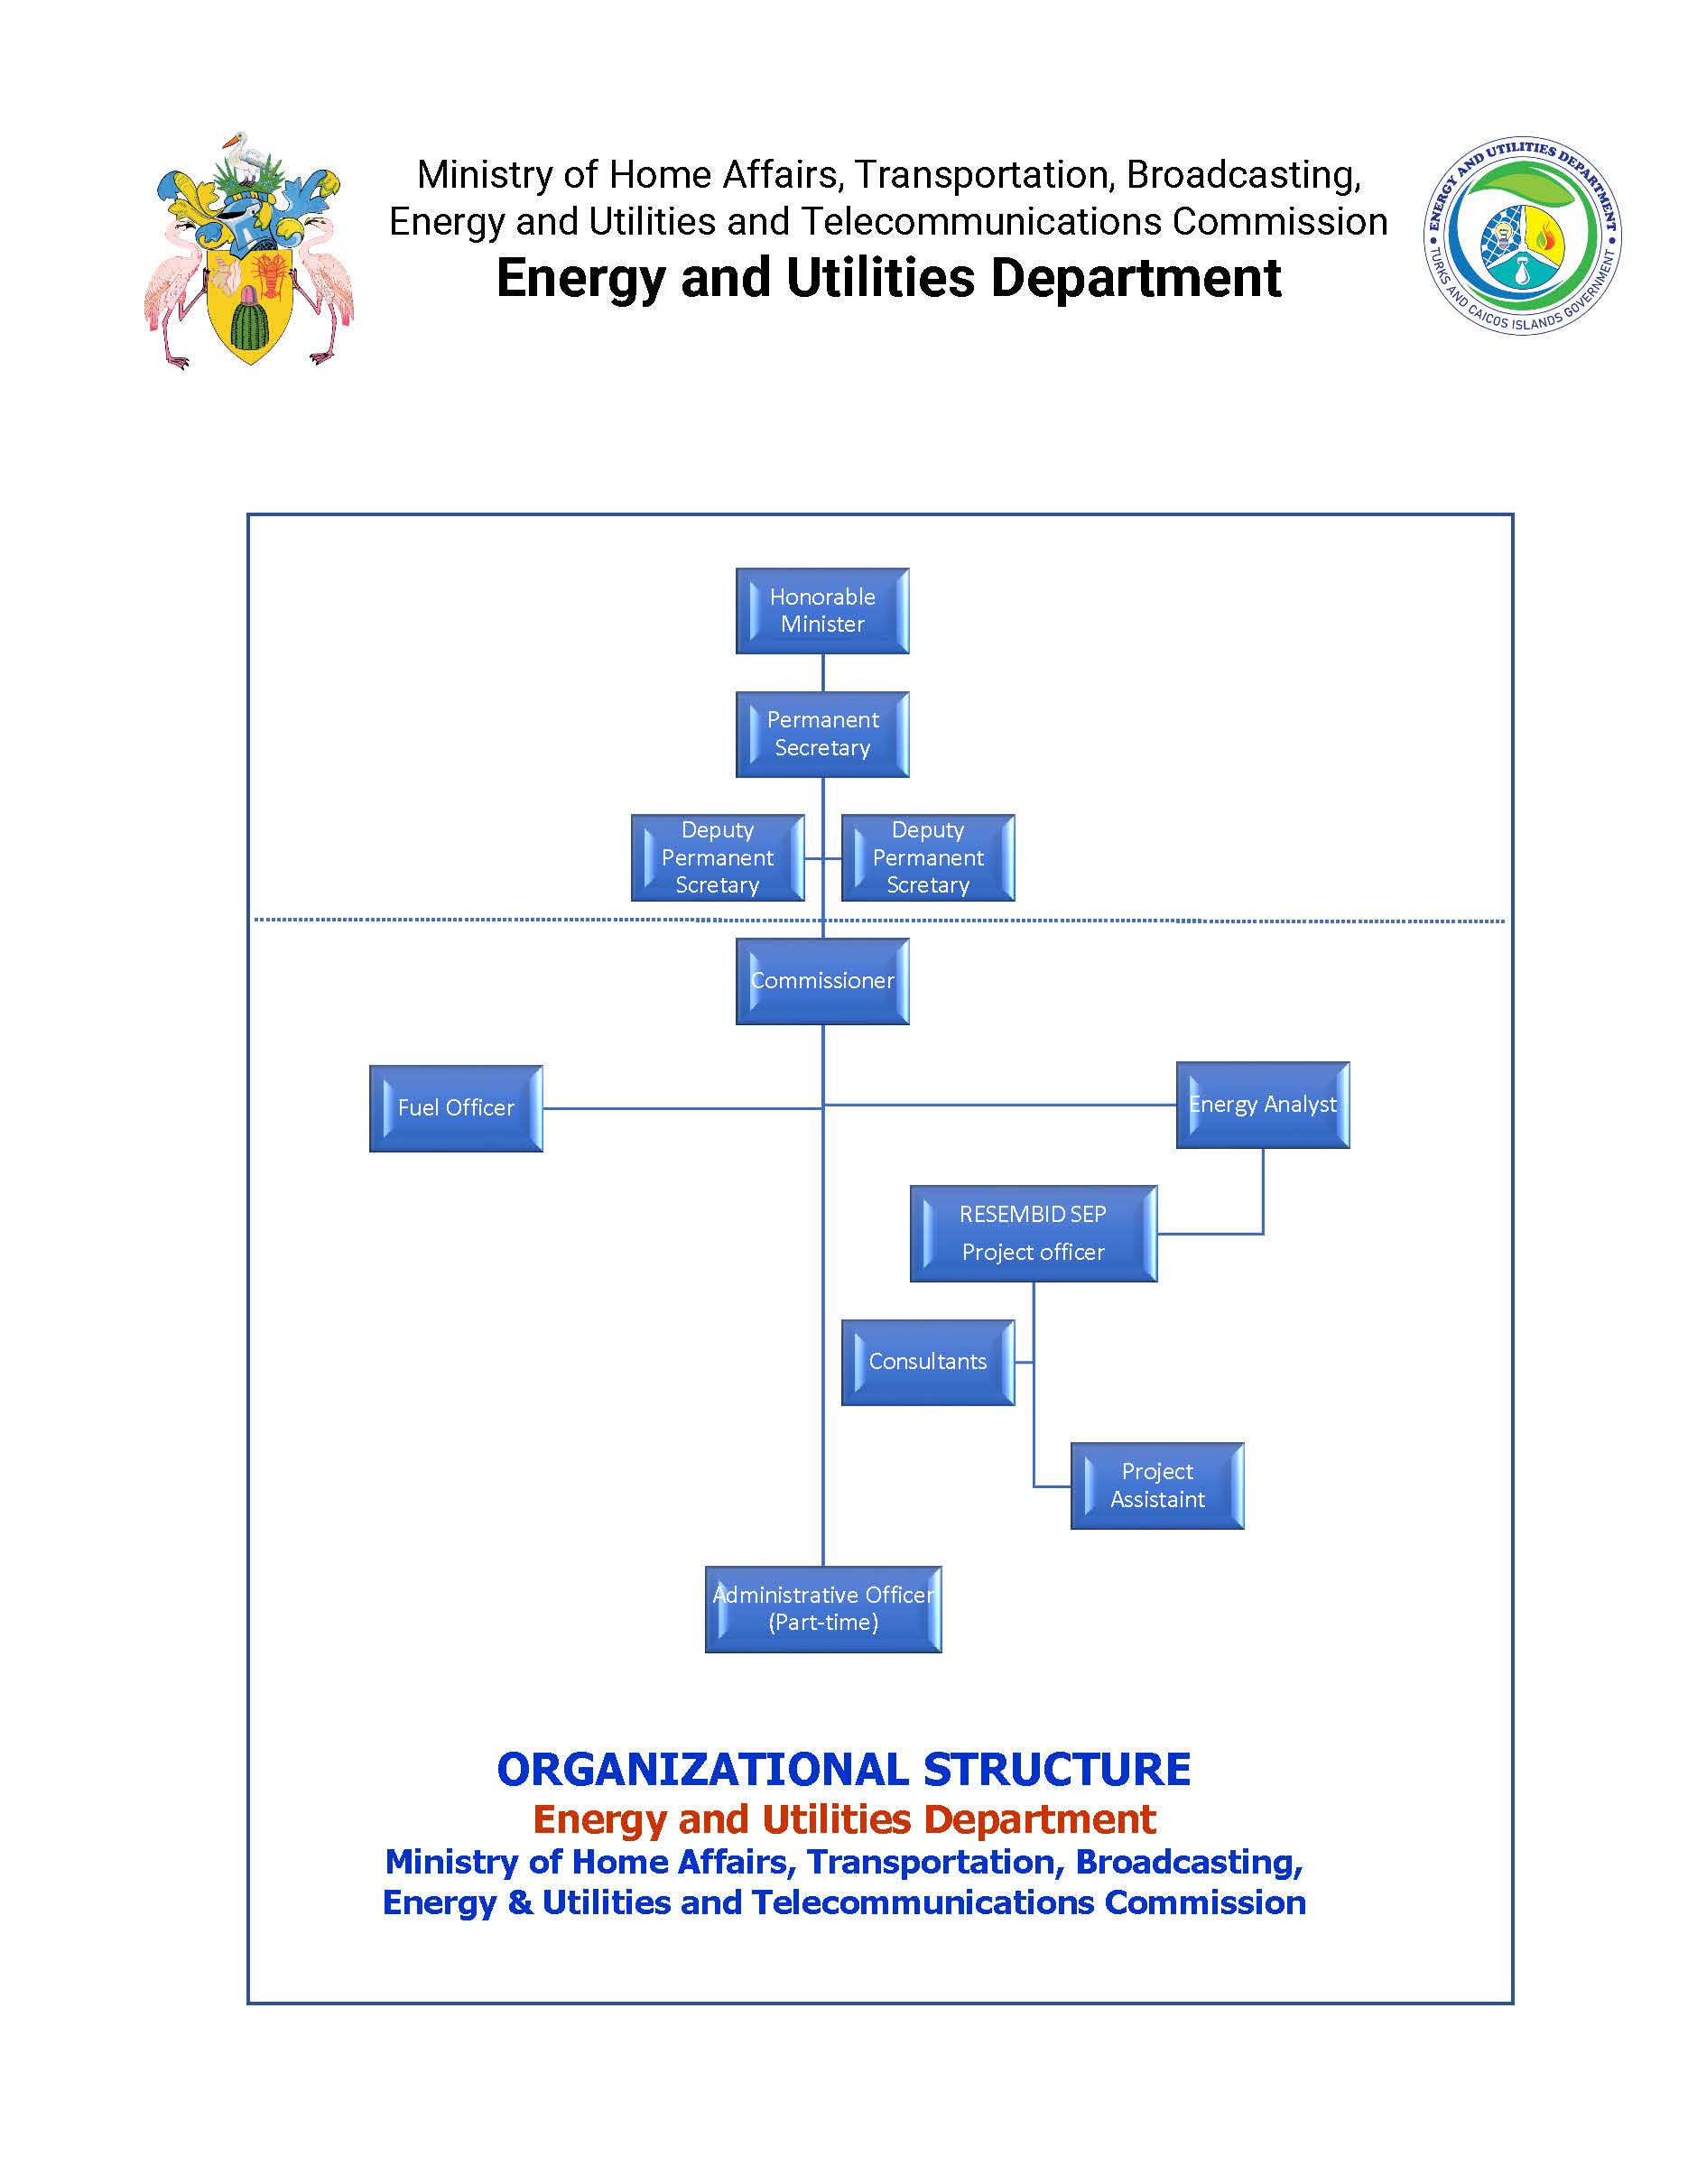 EUD Organizational Structure